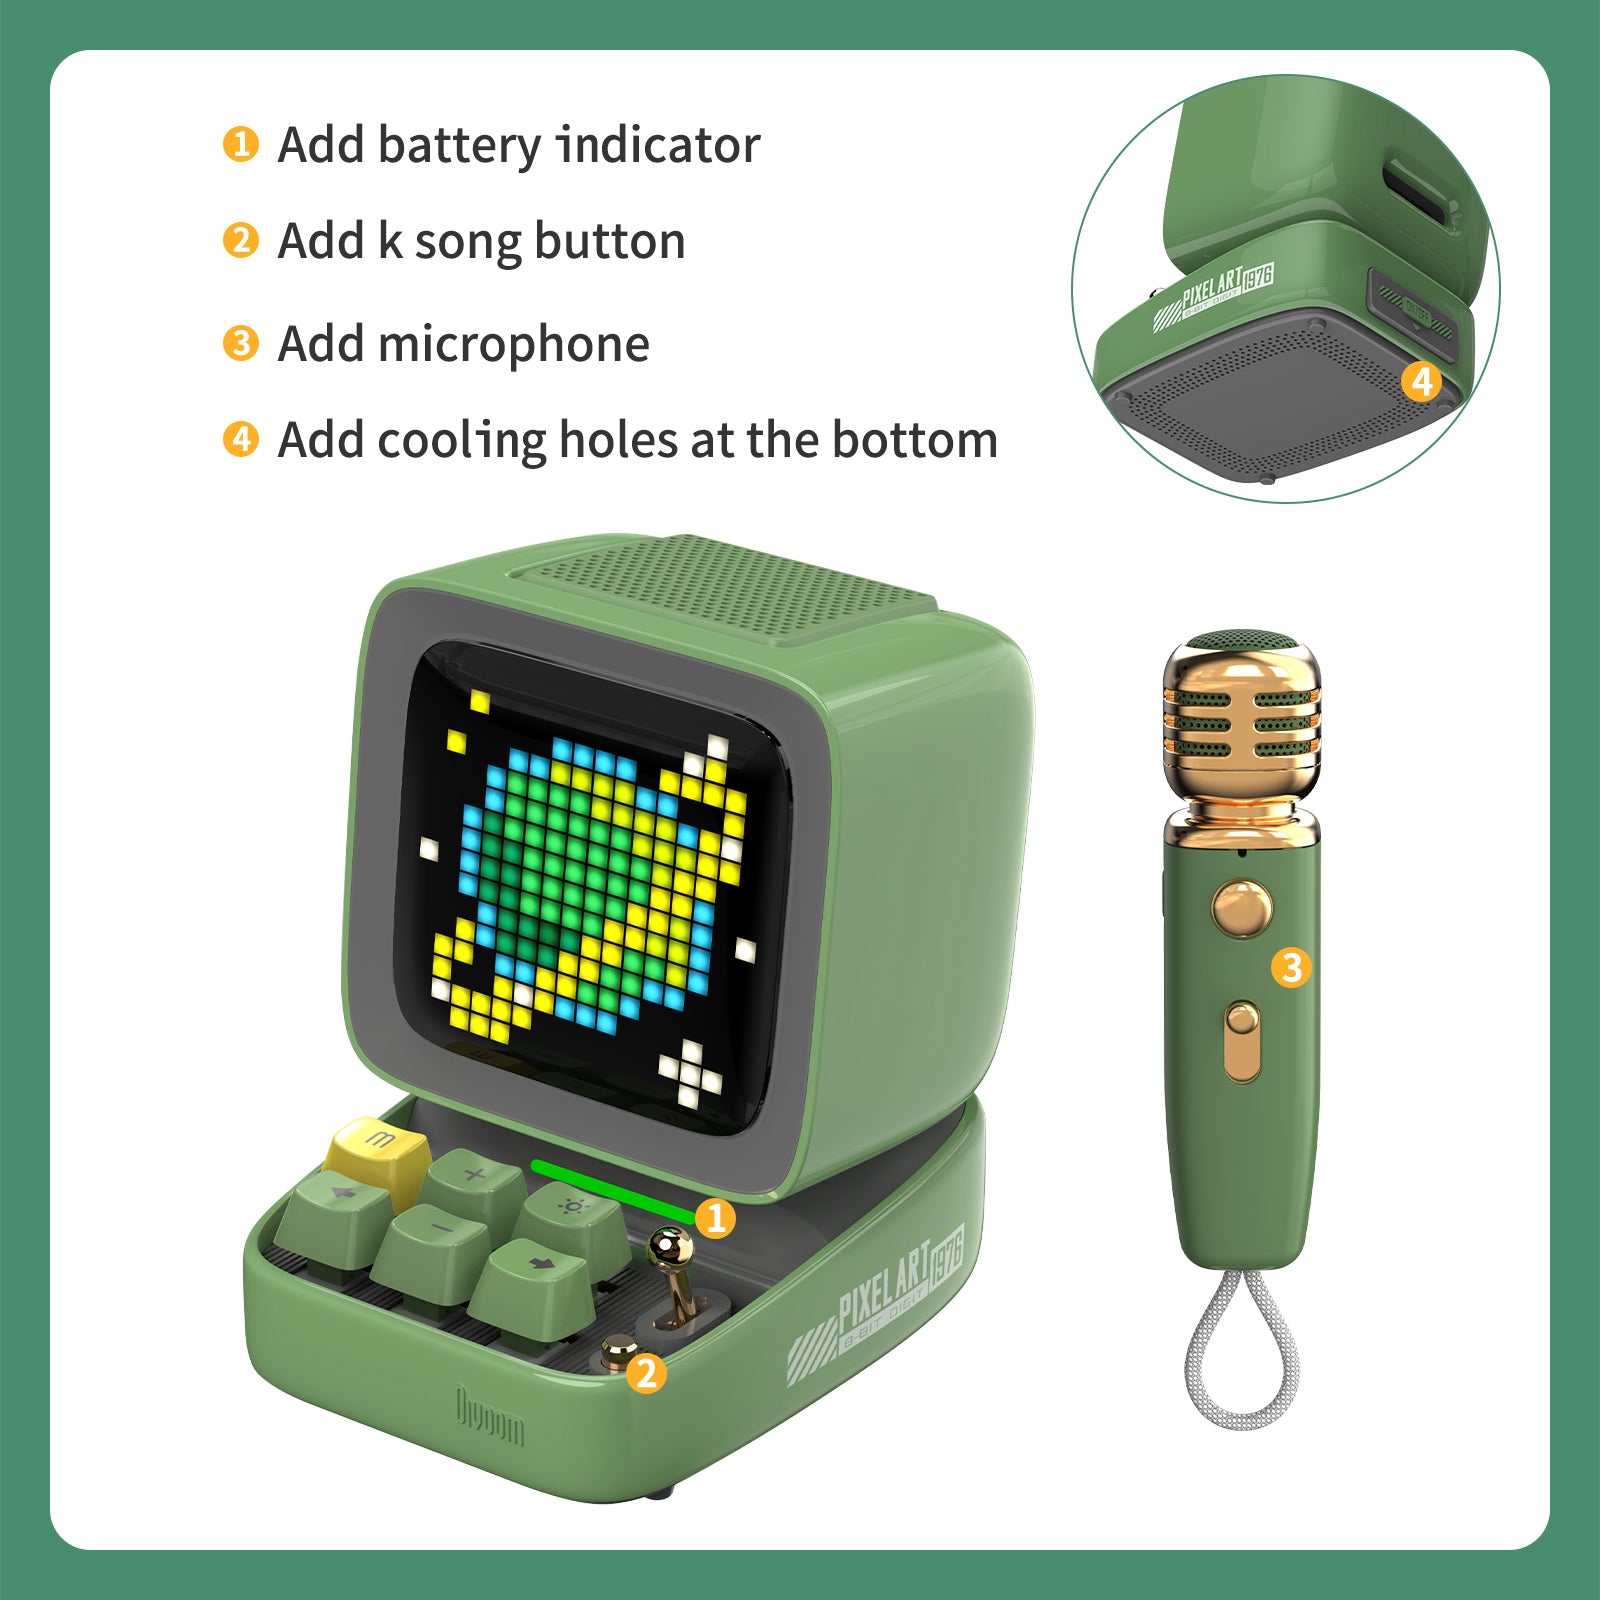 Divoom Ditoo-Mic Mini Karaoké Machine Pixel Art Enceinte Bluetooth